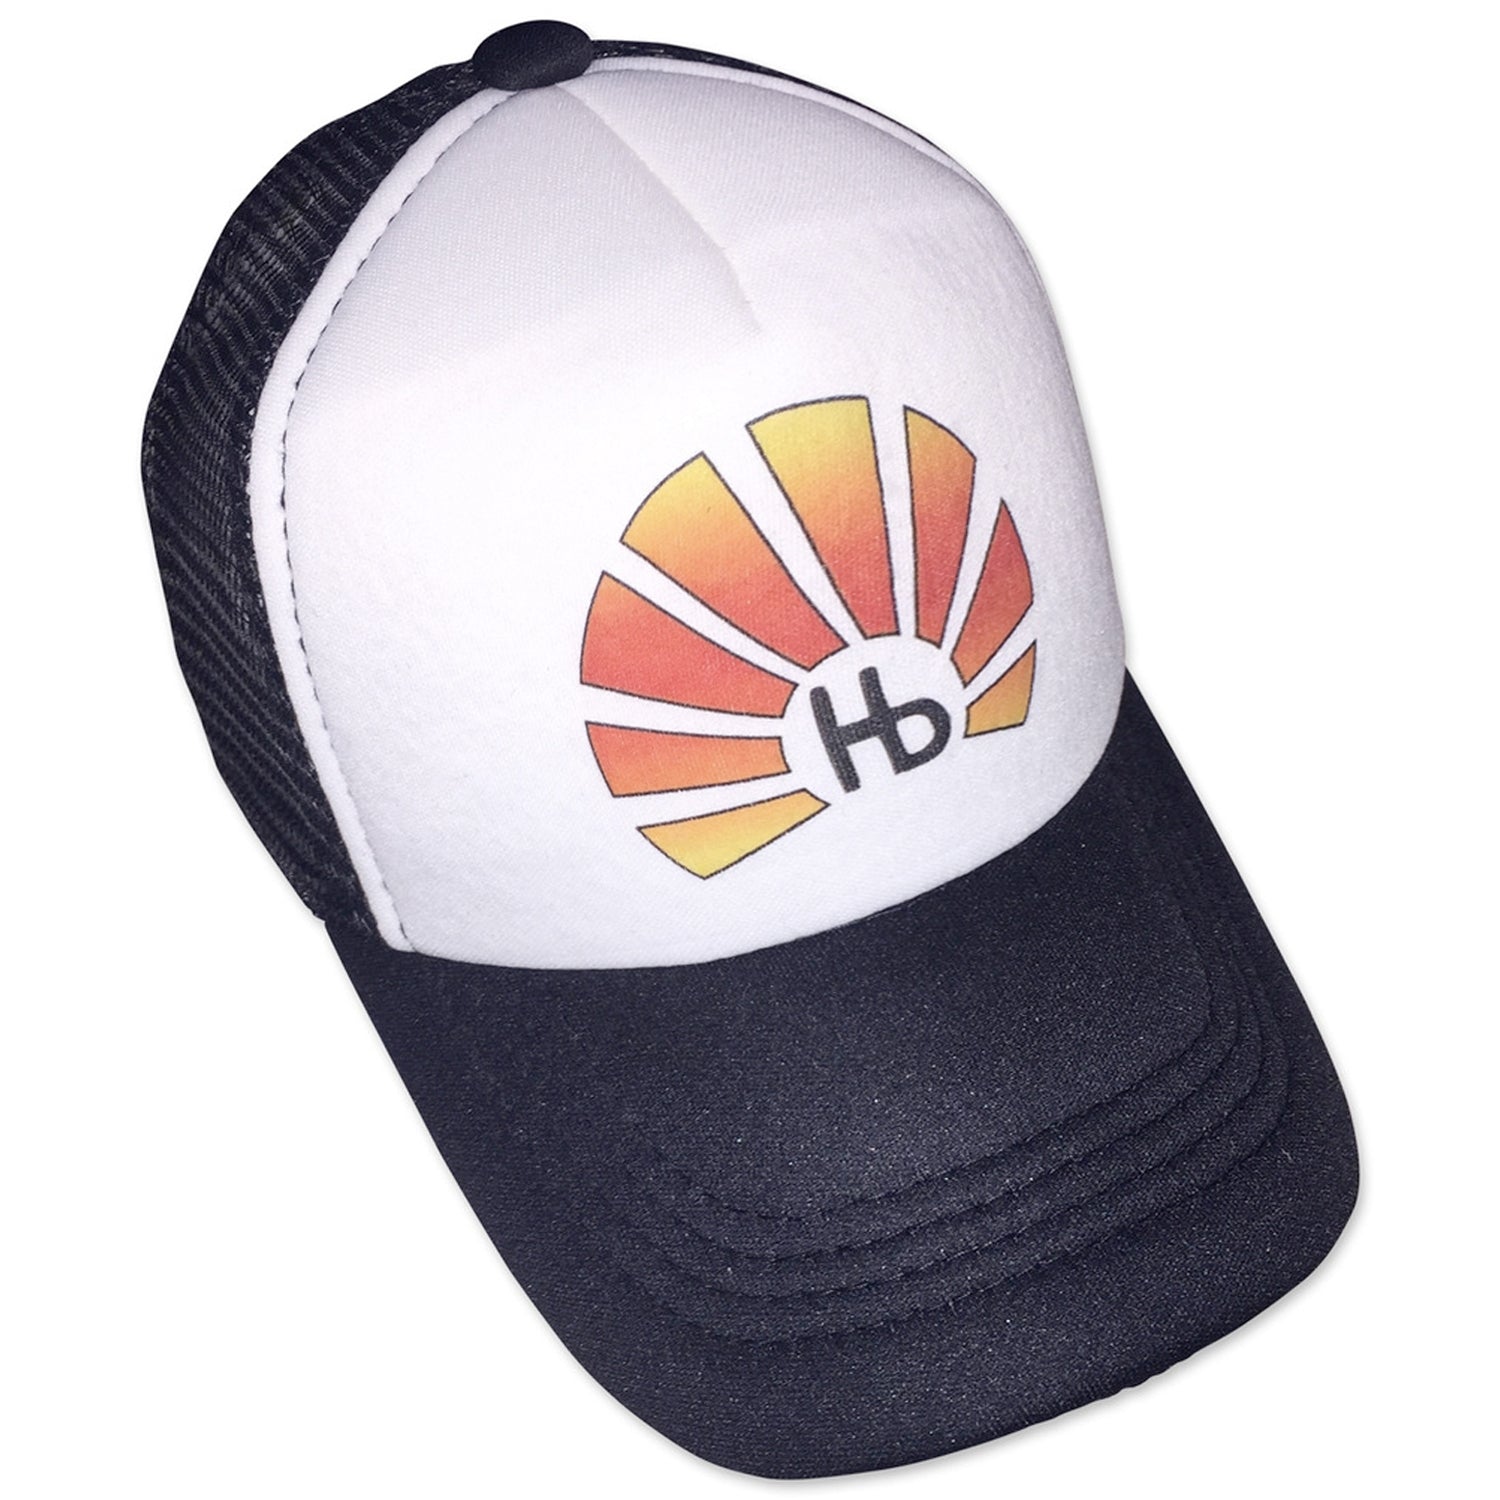 Sol Baby Hb Sunburst Black Trucker Hat